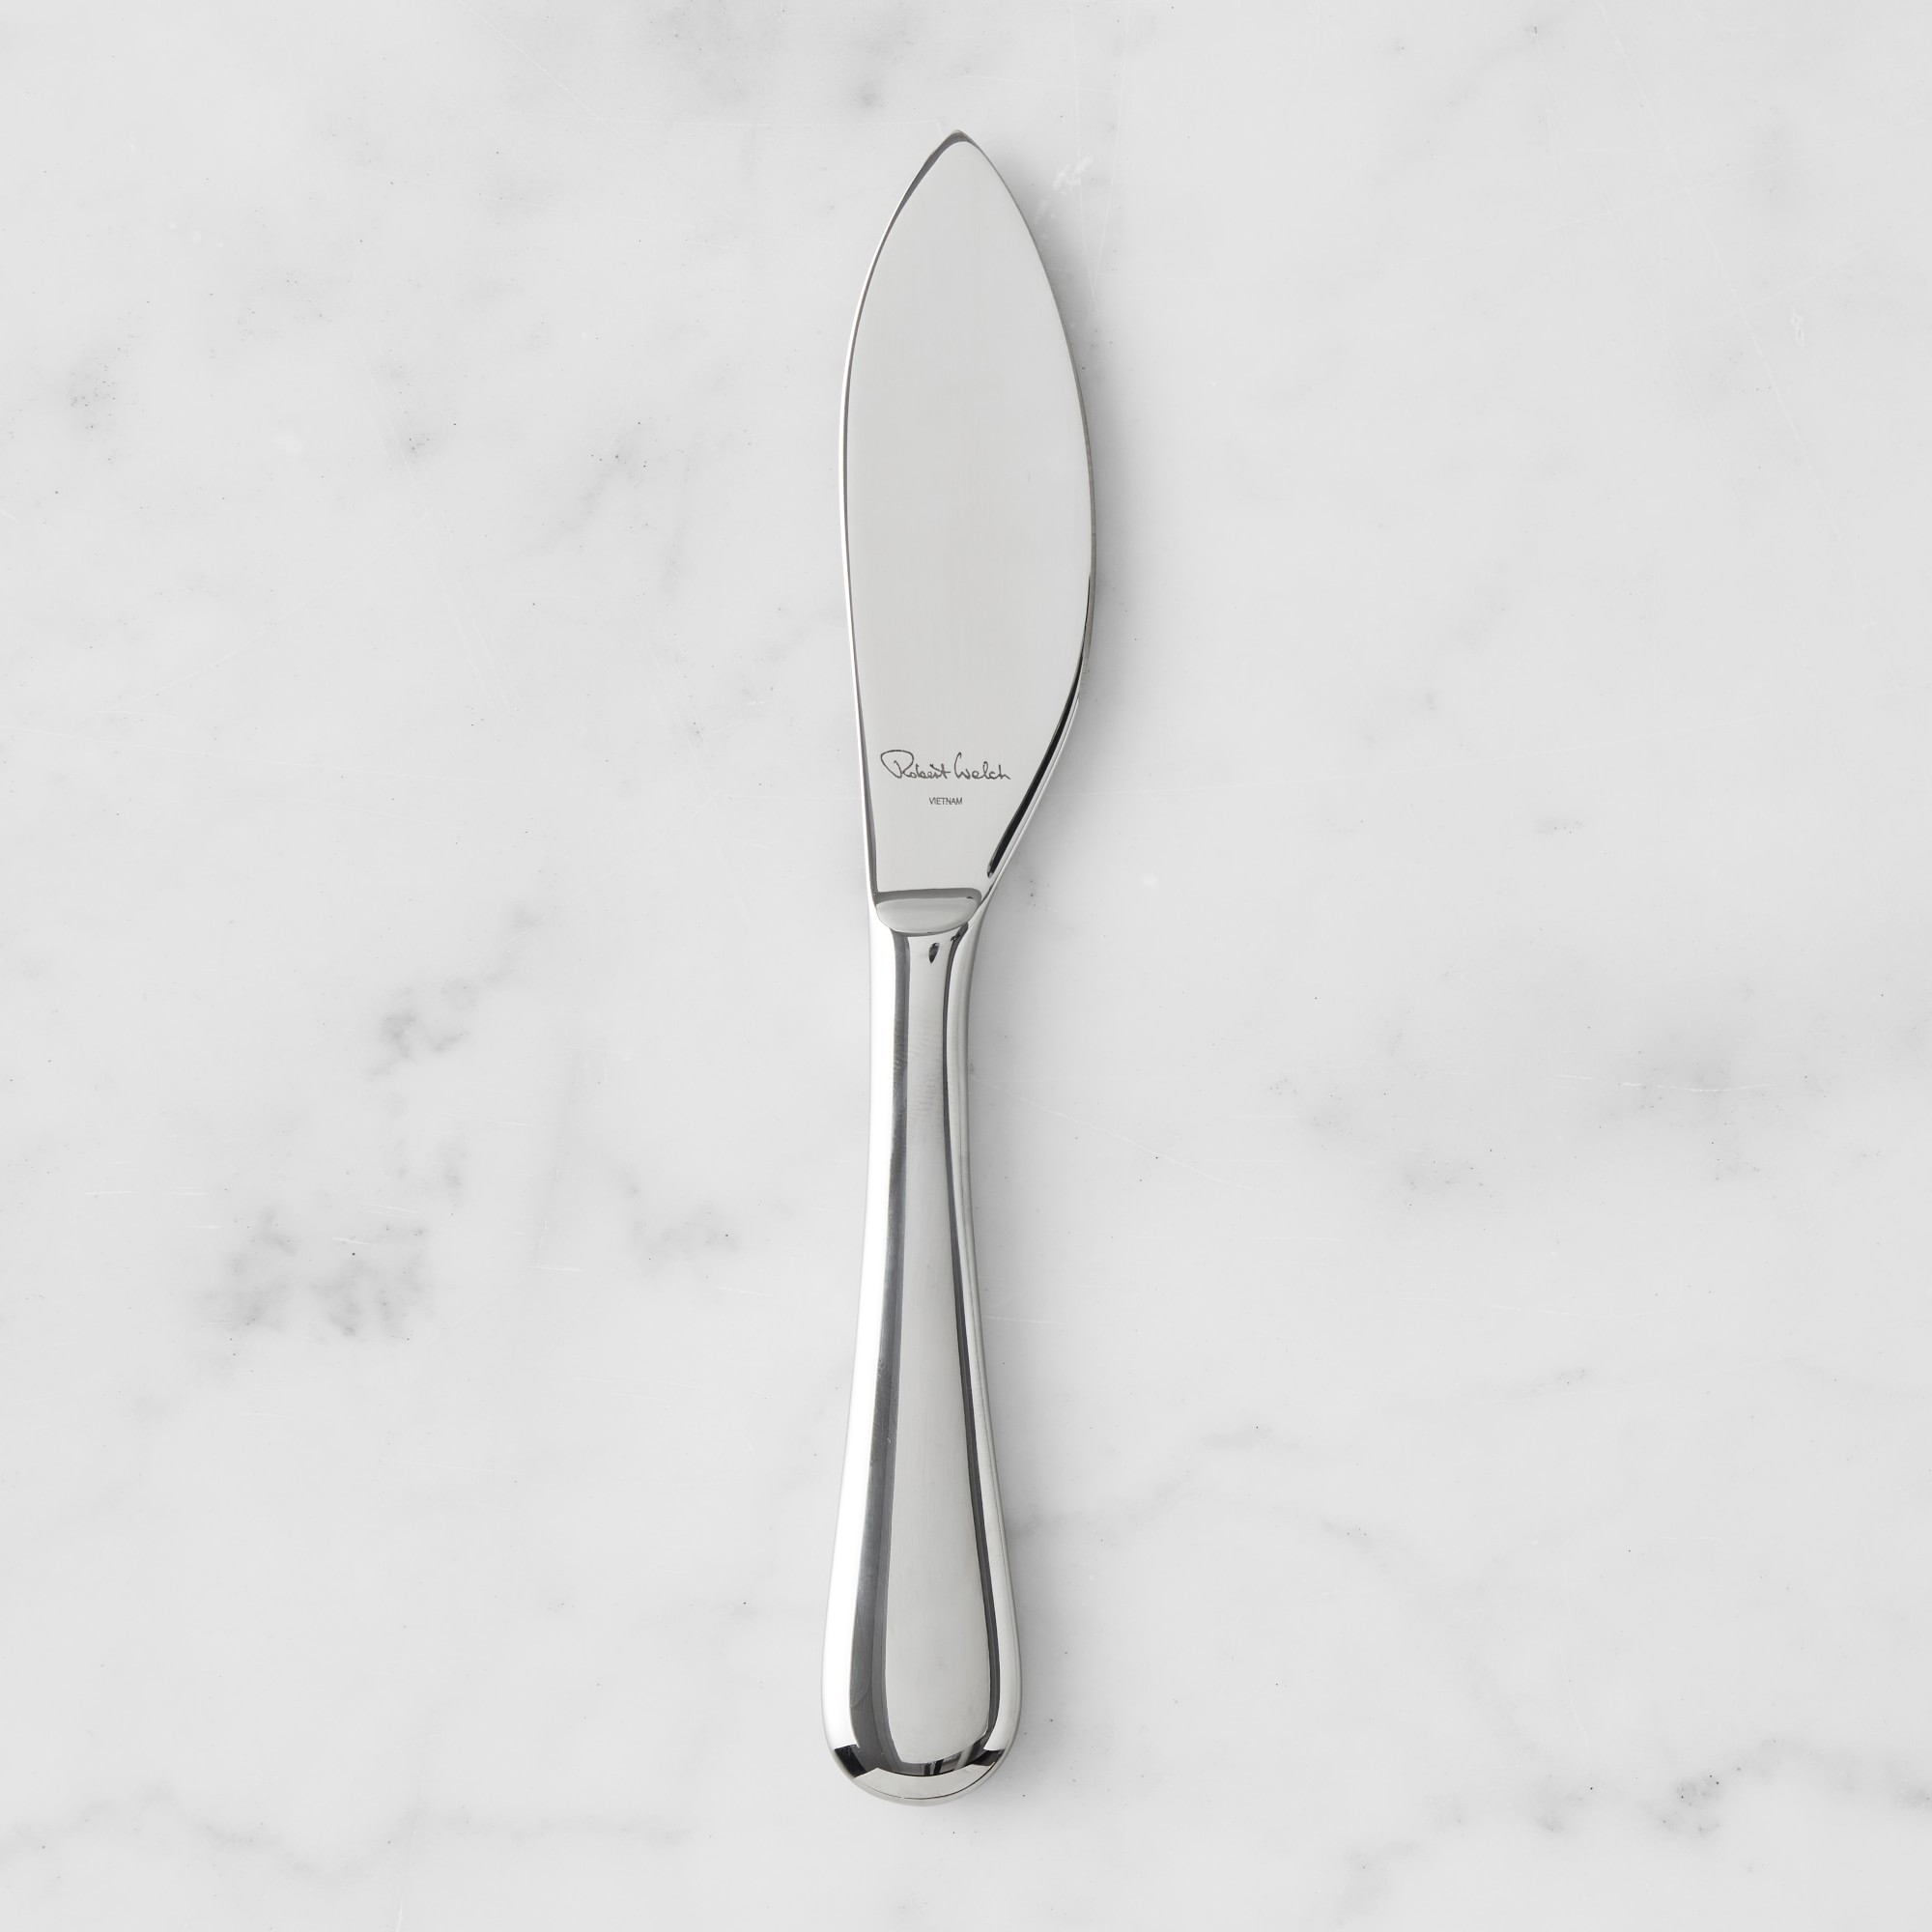 Robert Welch Kingham Mirror Parmesan Cheese Knife, 7"